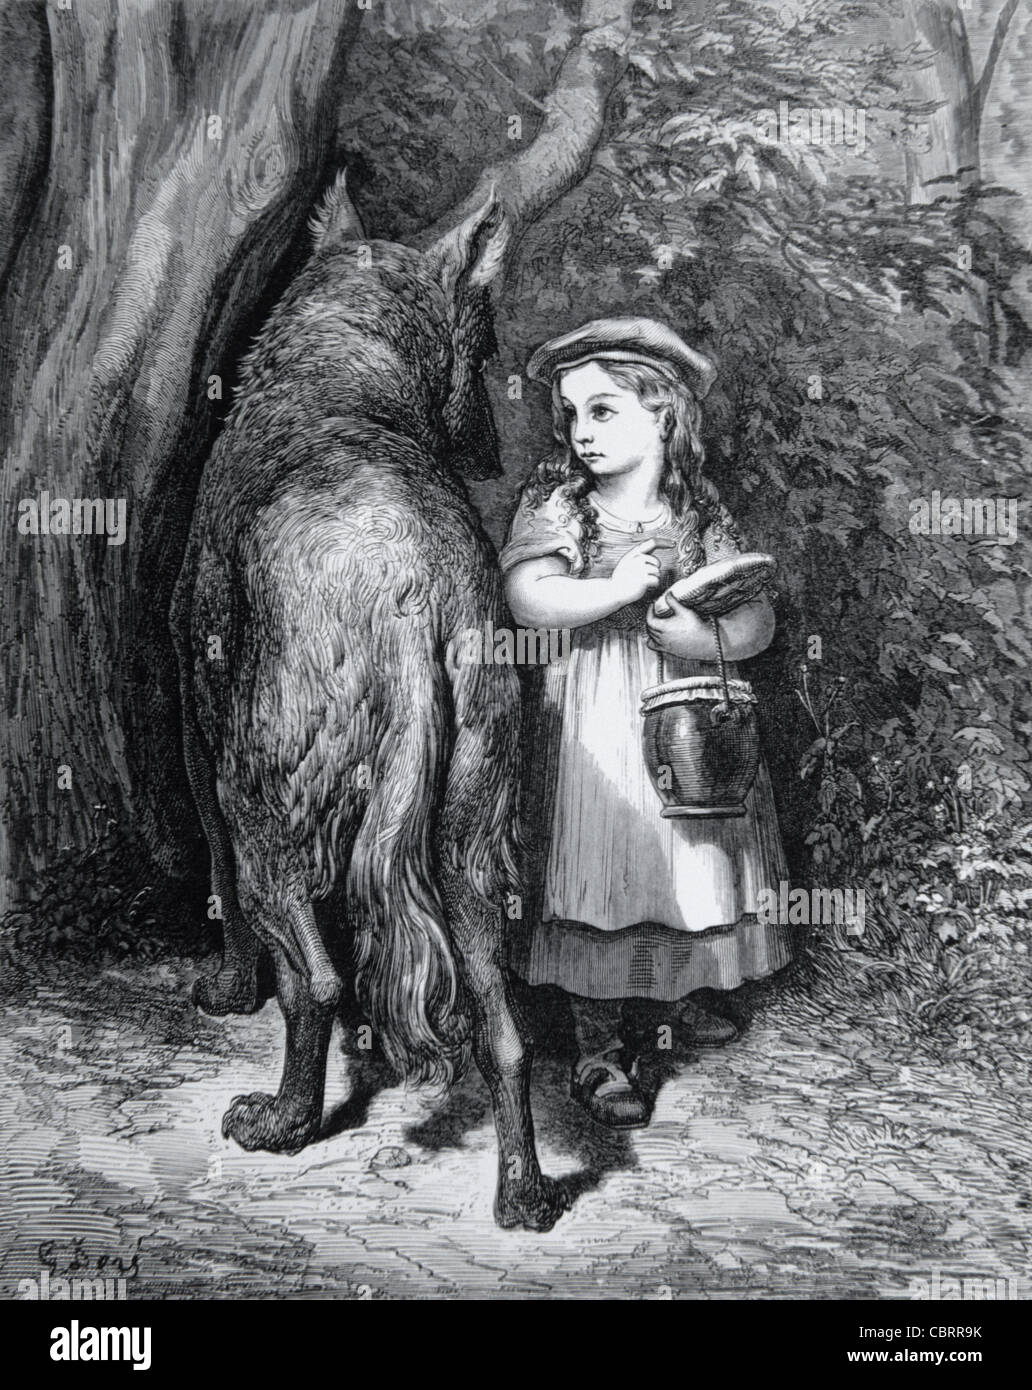 Little Red Riding Hood & The Big Bad Wolf Fairy Tale or Folk Story, gravure par Gustave doré, 1862 Banque D'Images